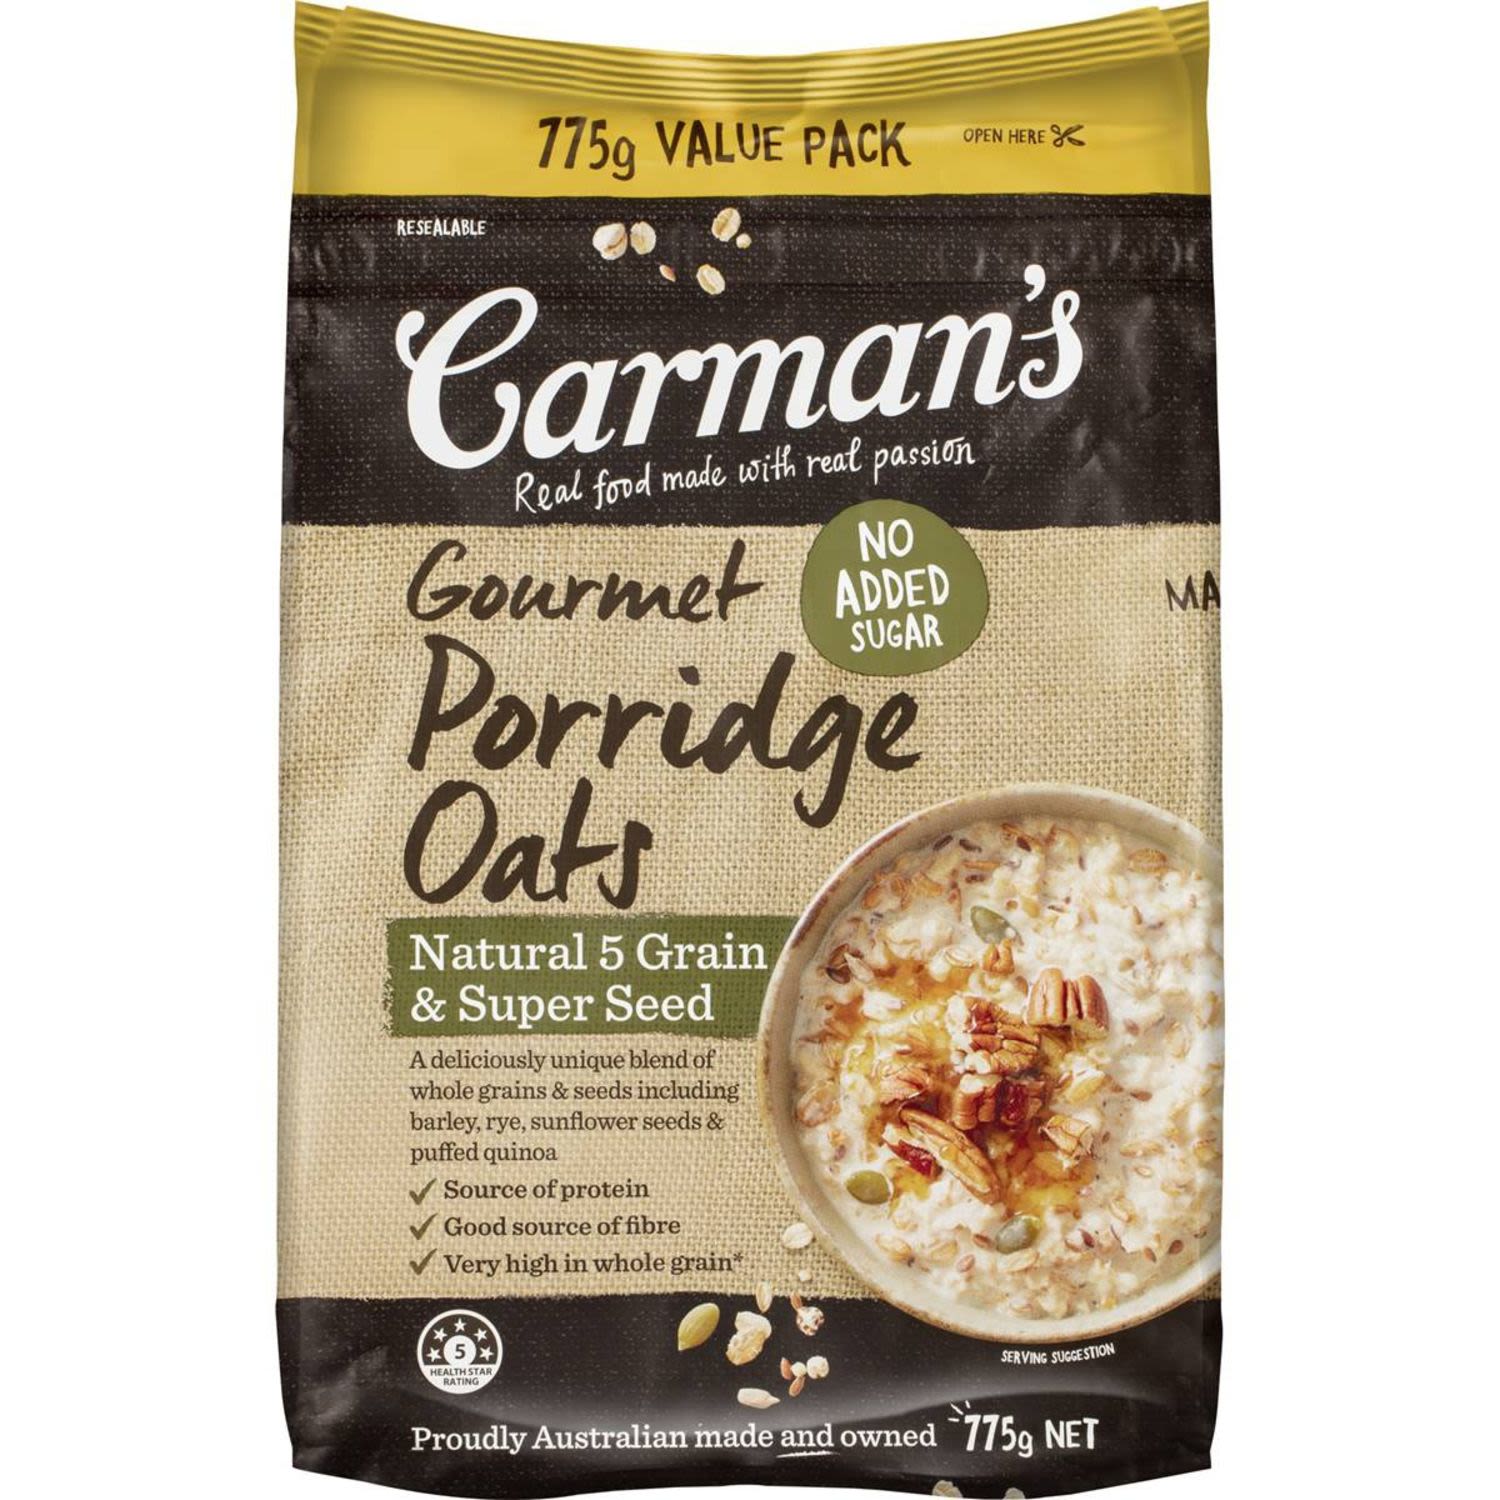 Carman's Gourmet Porridge Oats Natural 5 Grain & Super Seed, 775 Gram